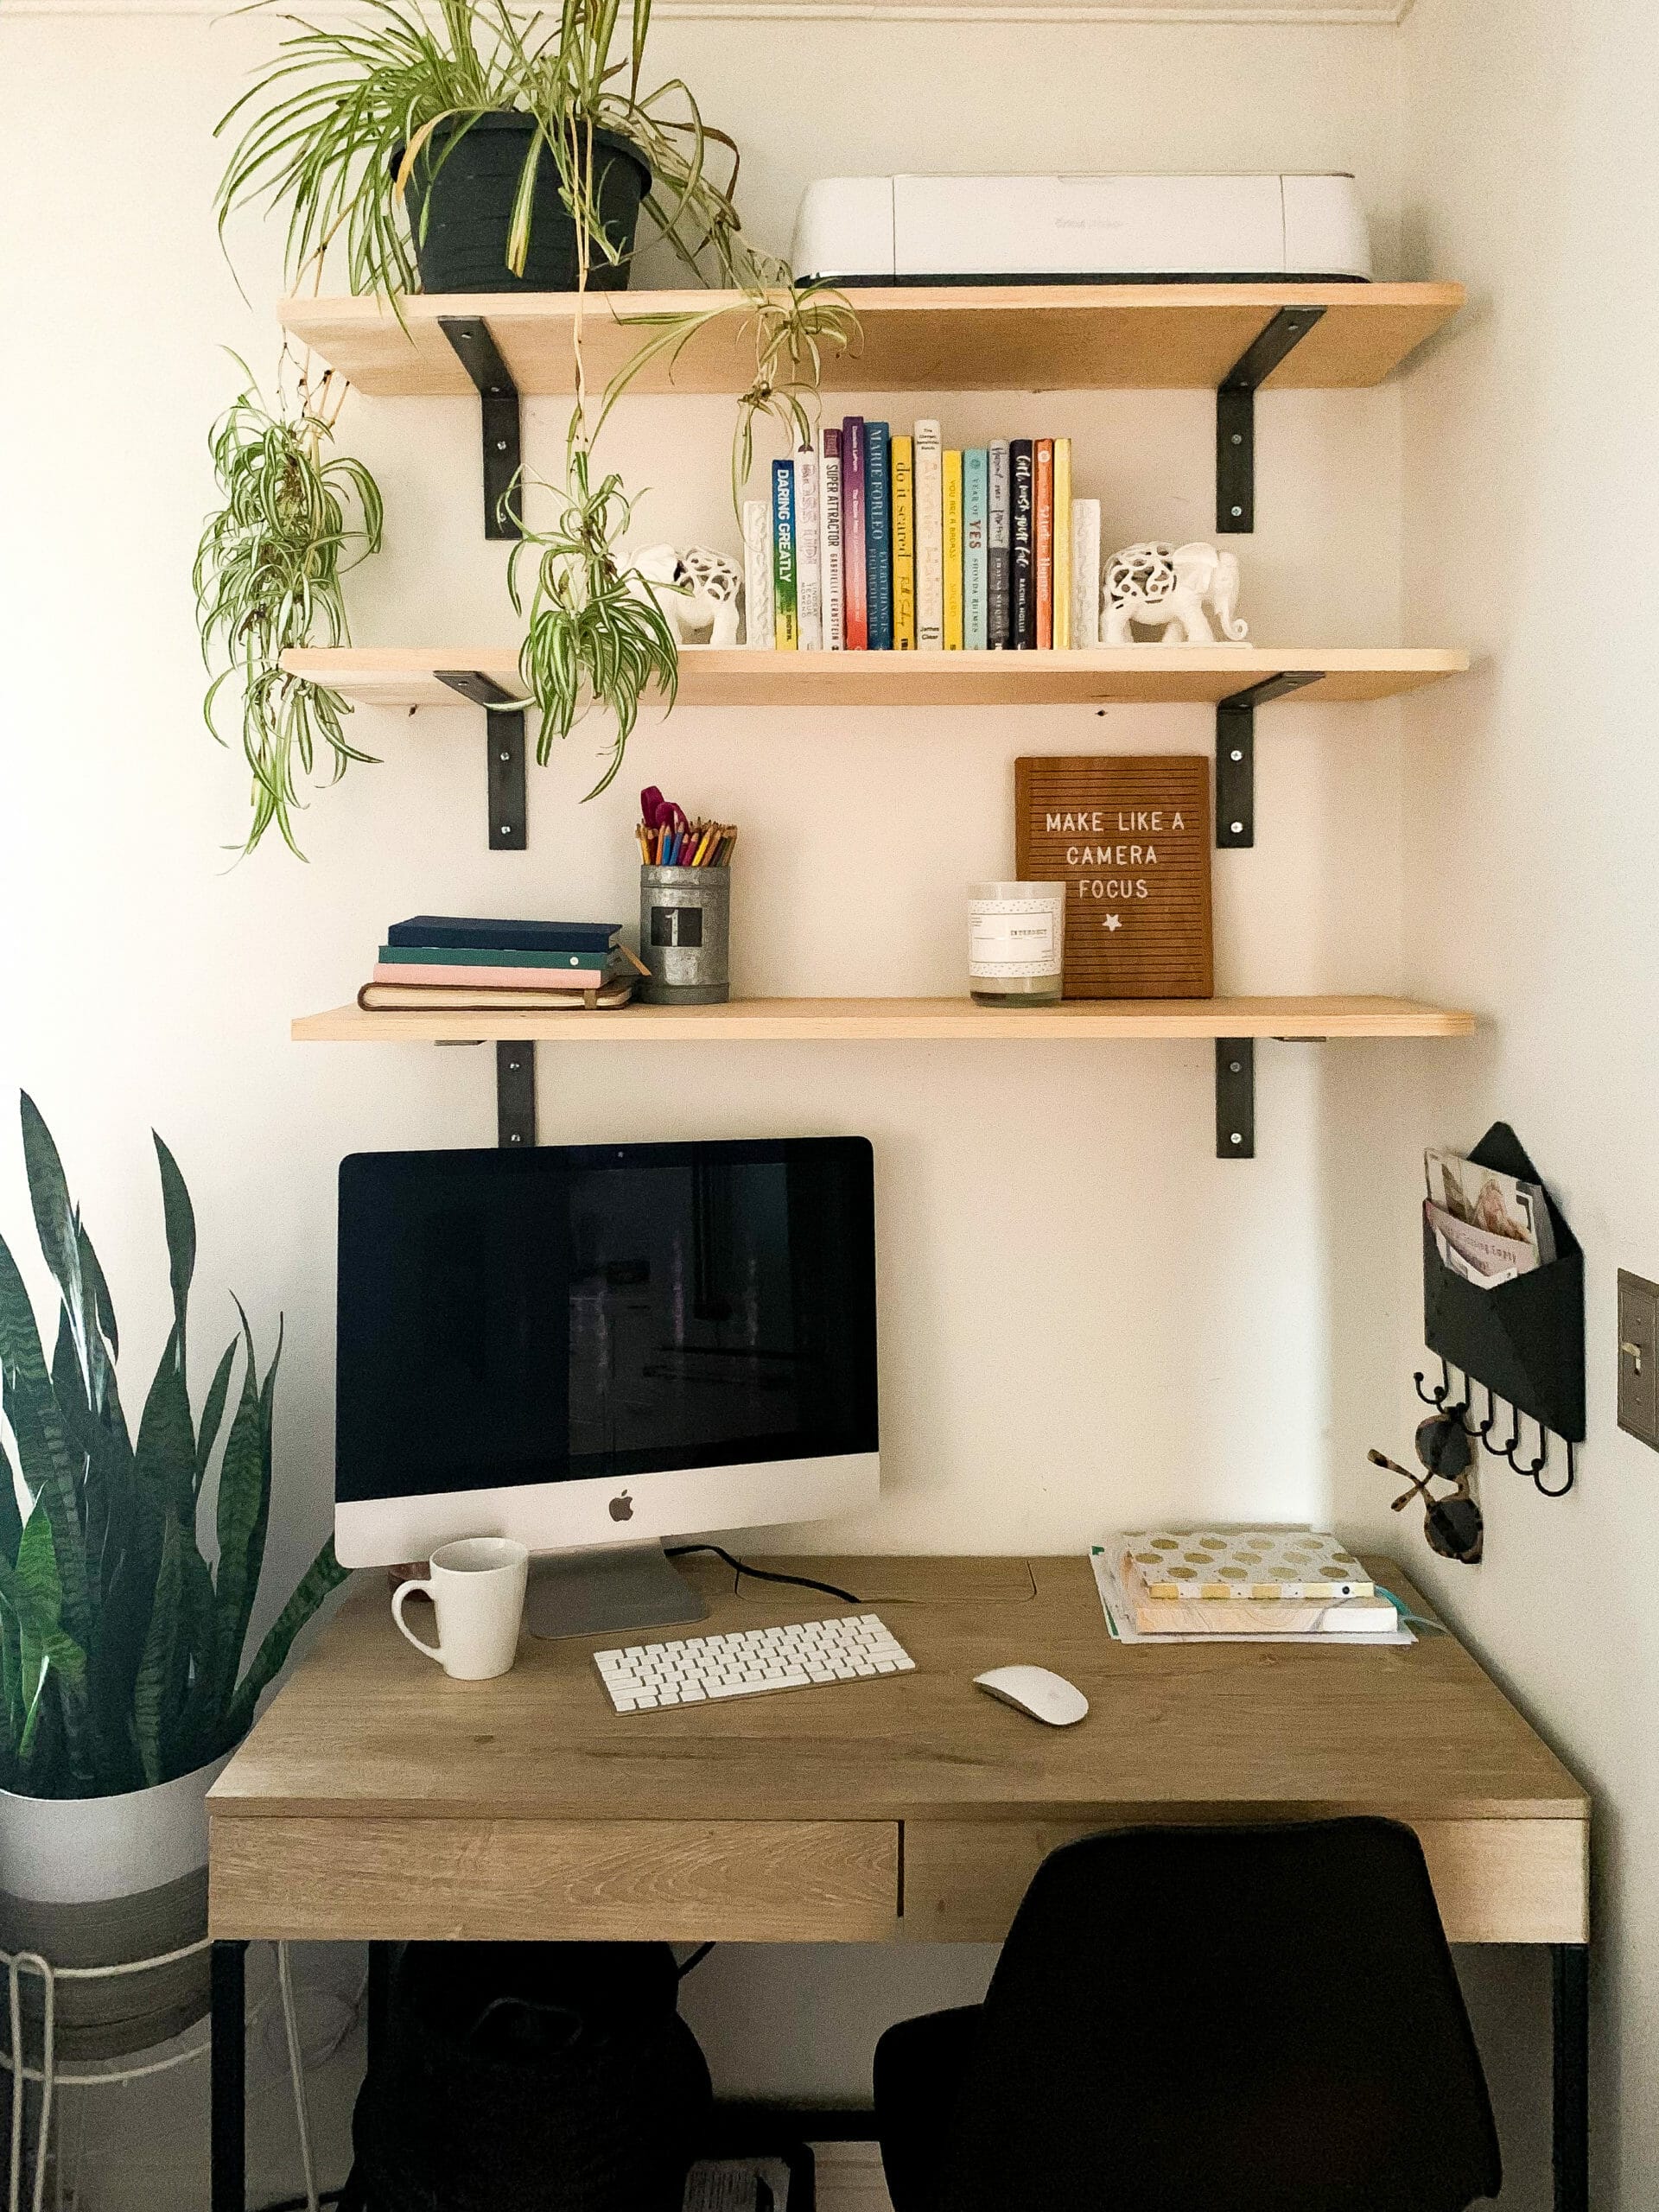 Home & Living :: Office & Organization :: Pens, Pencils & Writing